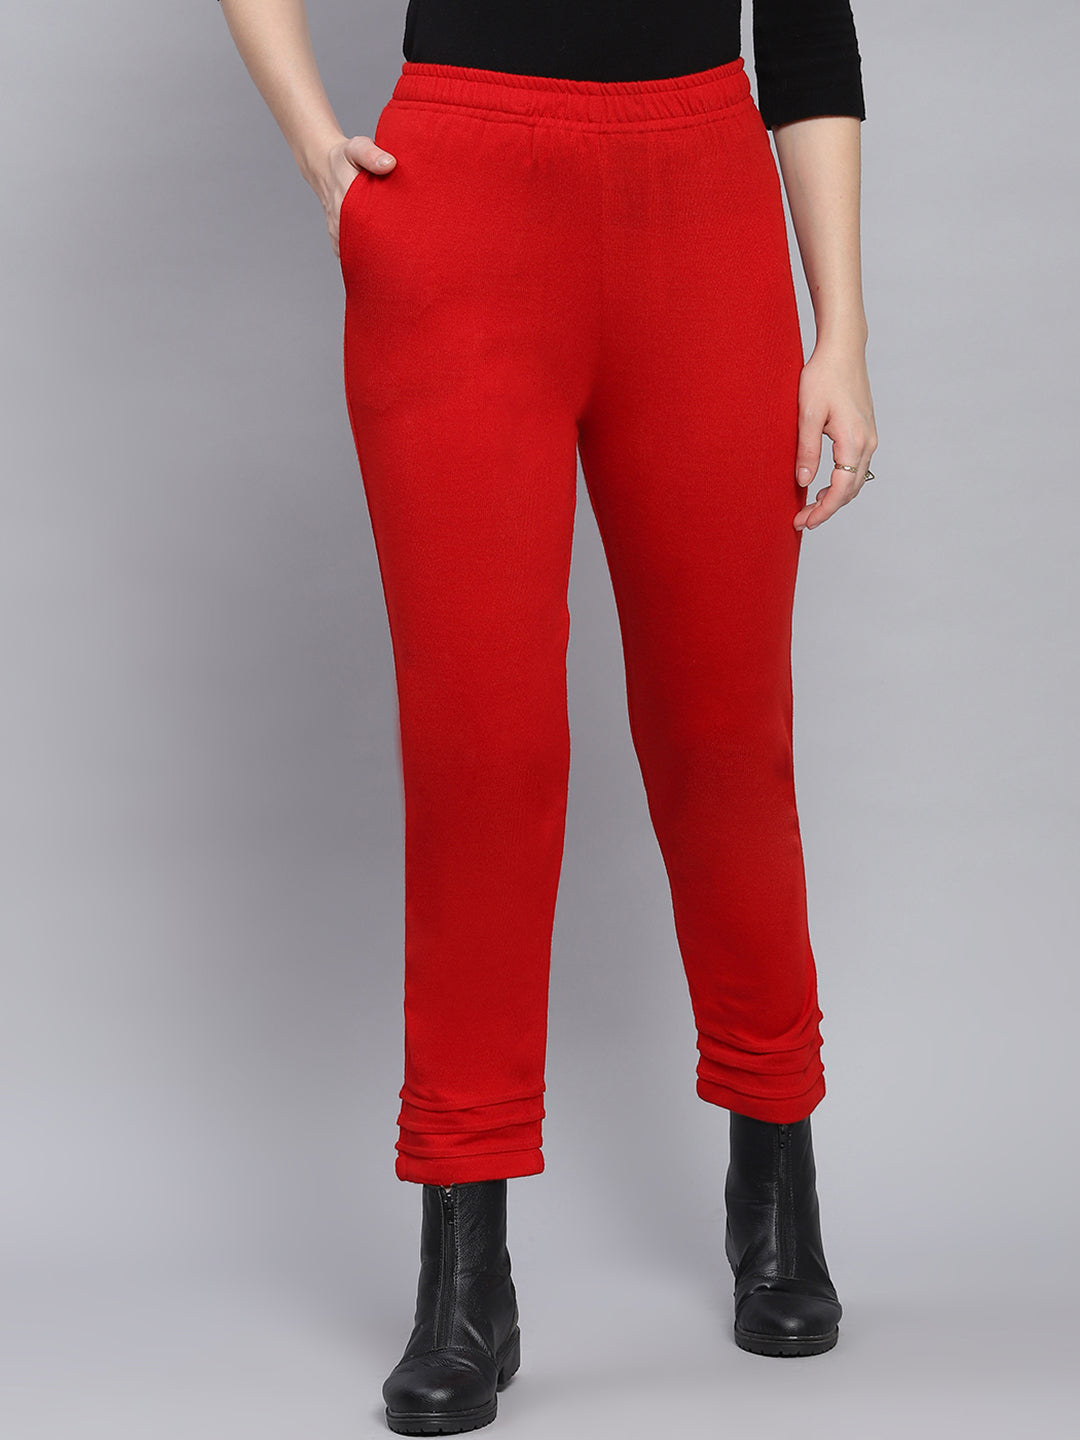 Women's Crepe Pant in Red | Lola